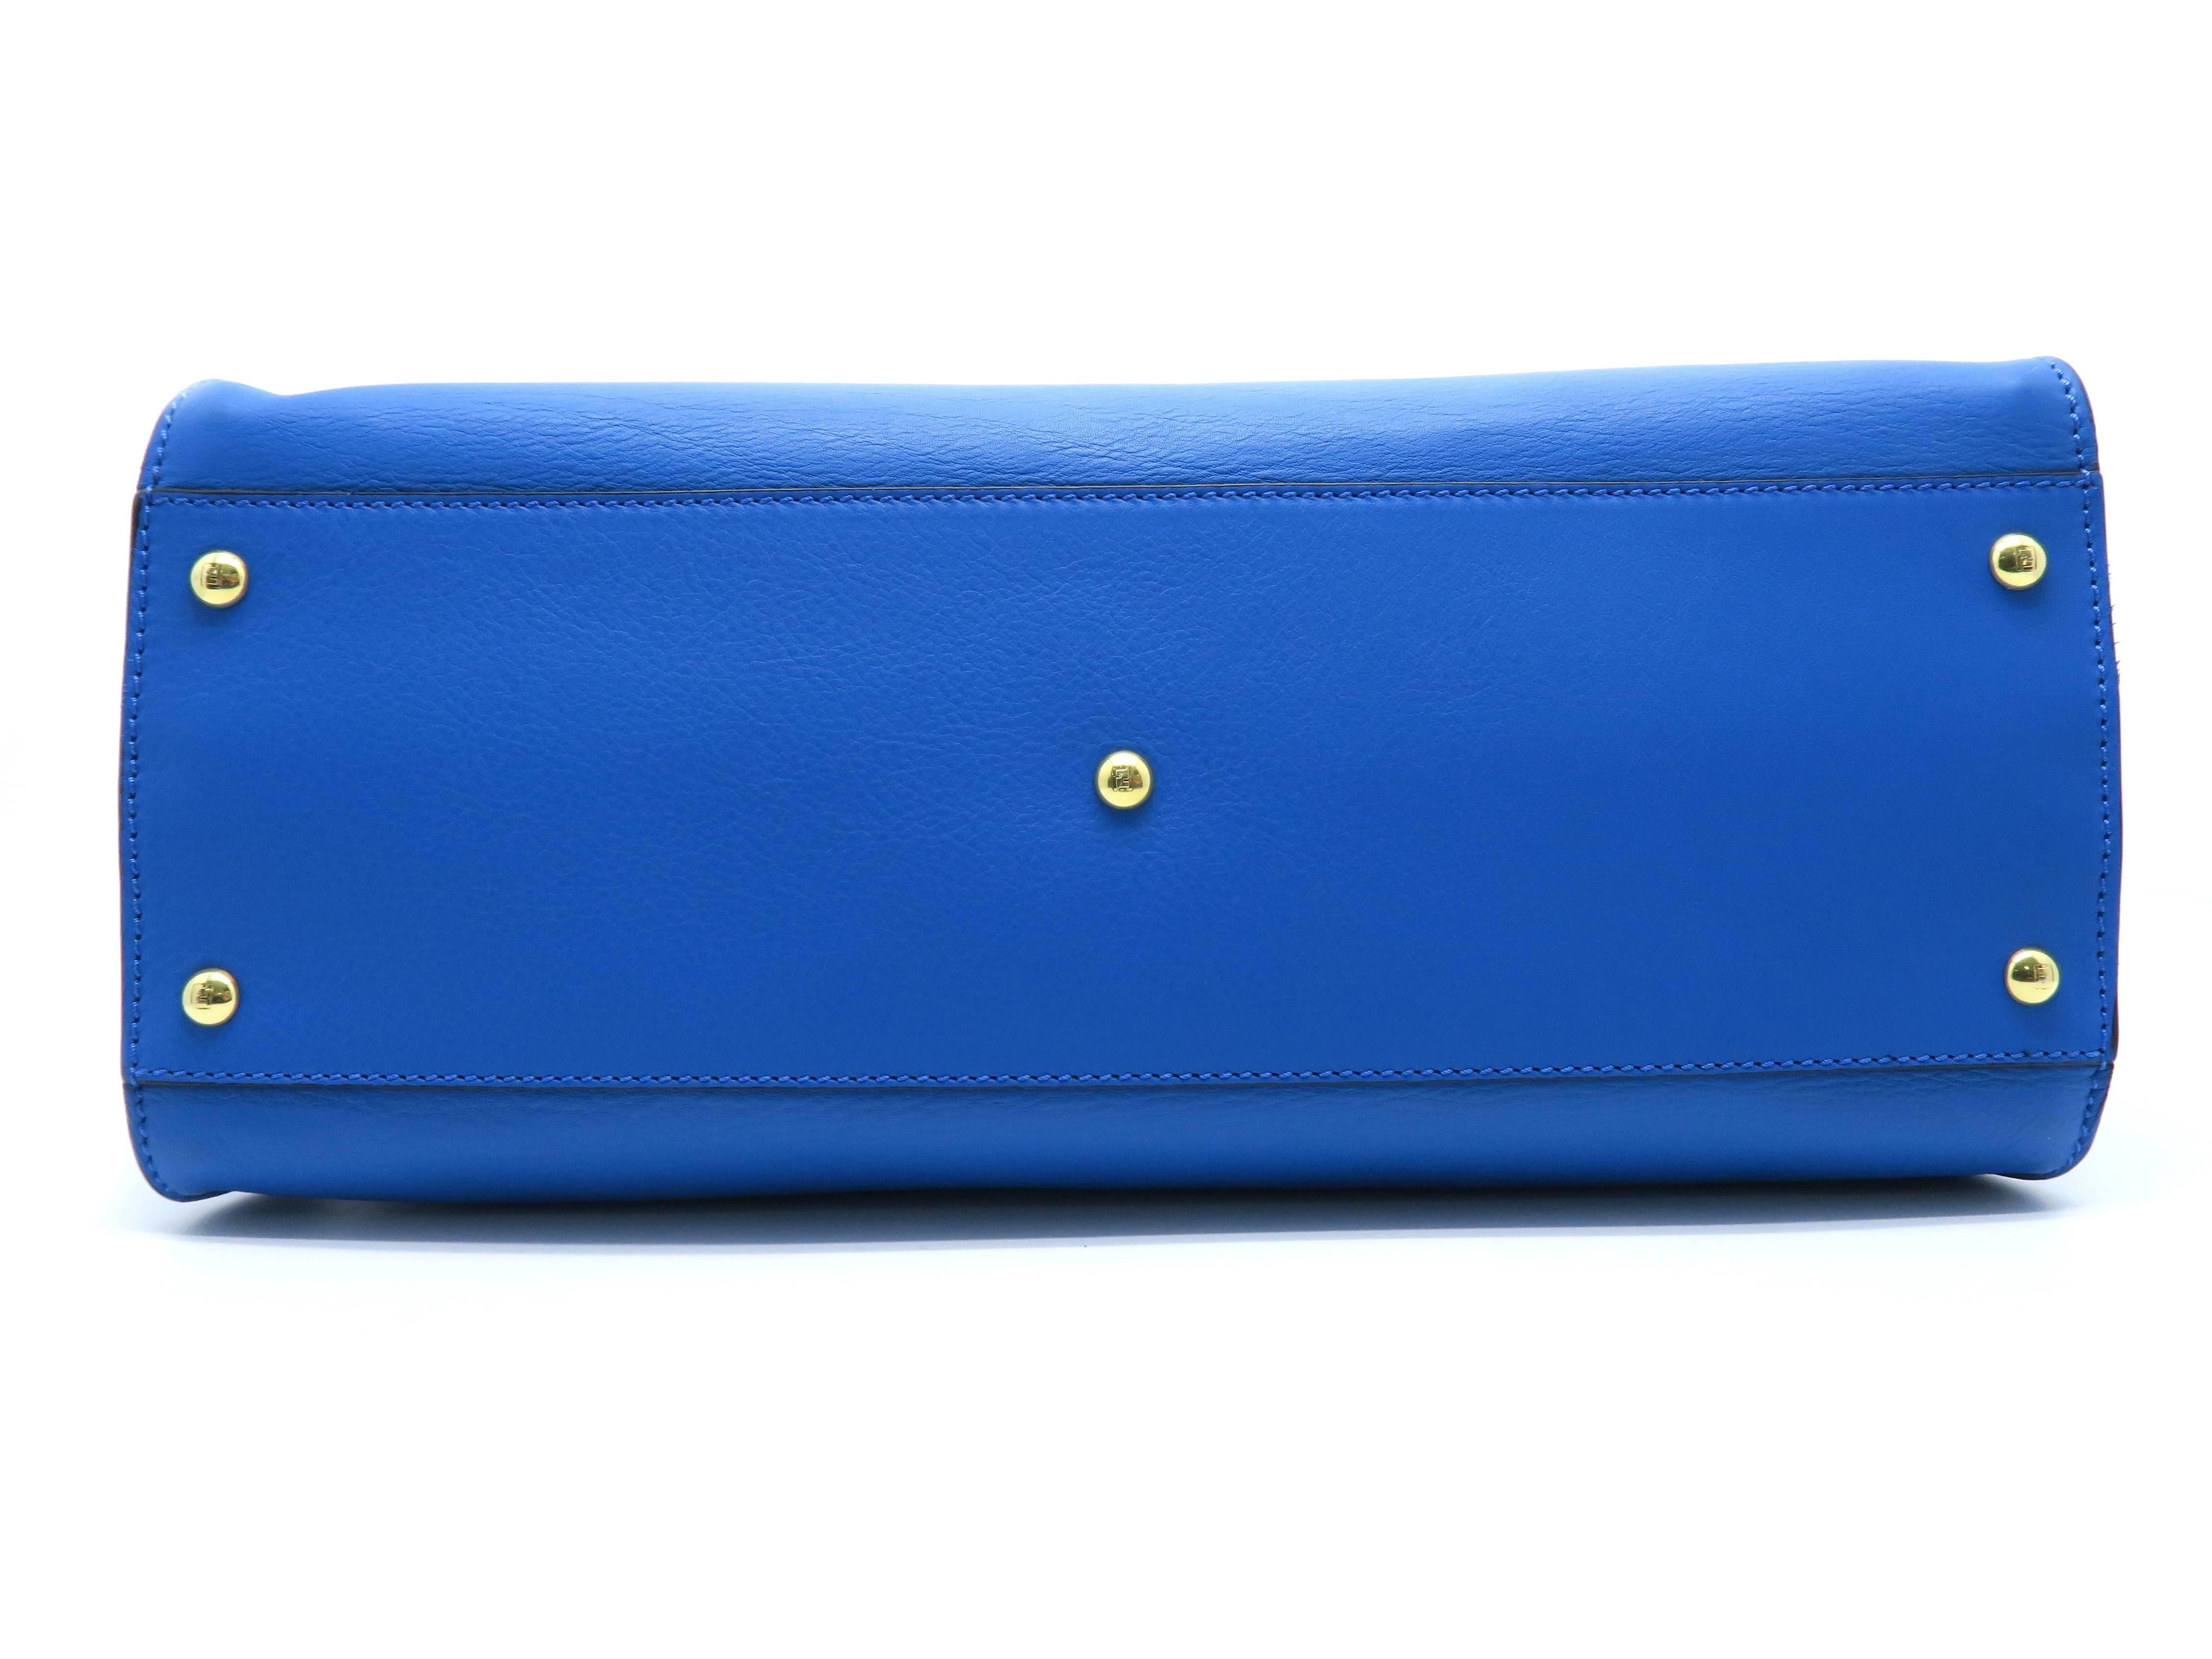 Fendi Peekaboo Blue Calfskin Leather Gold Metal Top Handle Bag 2